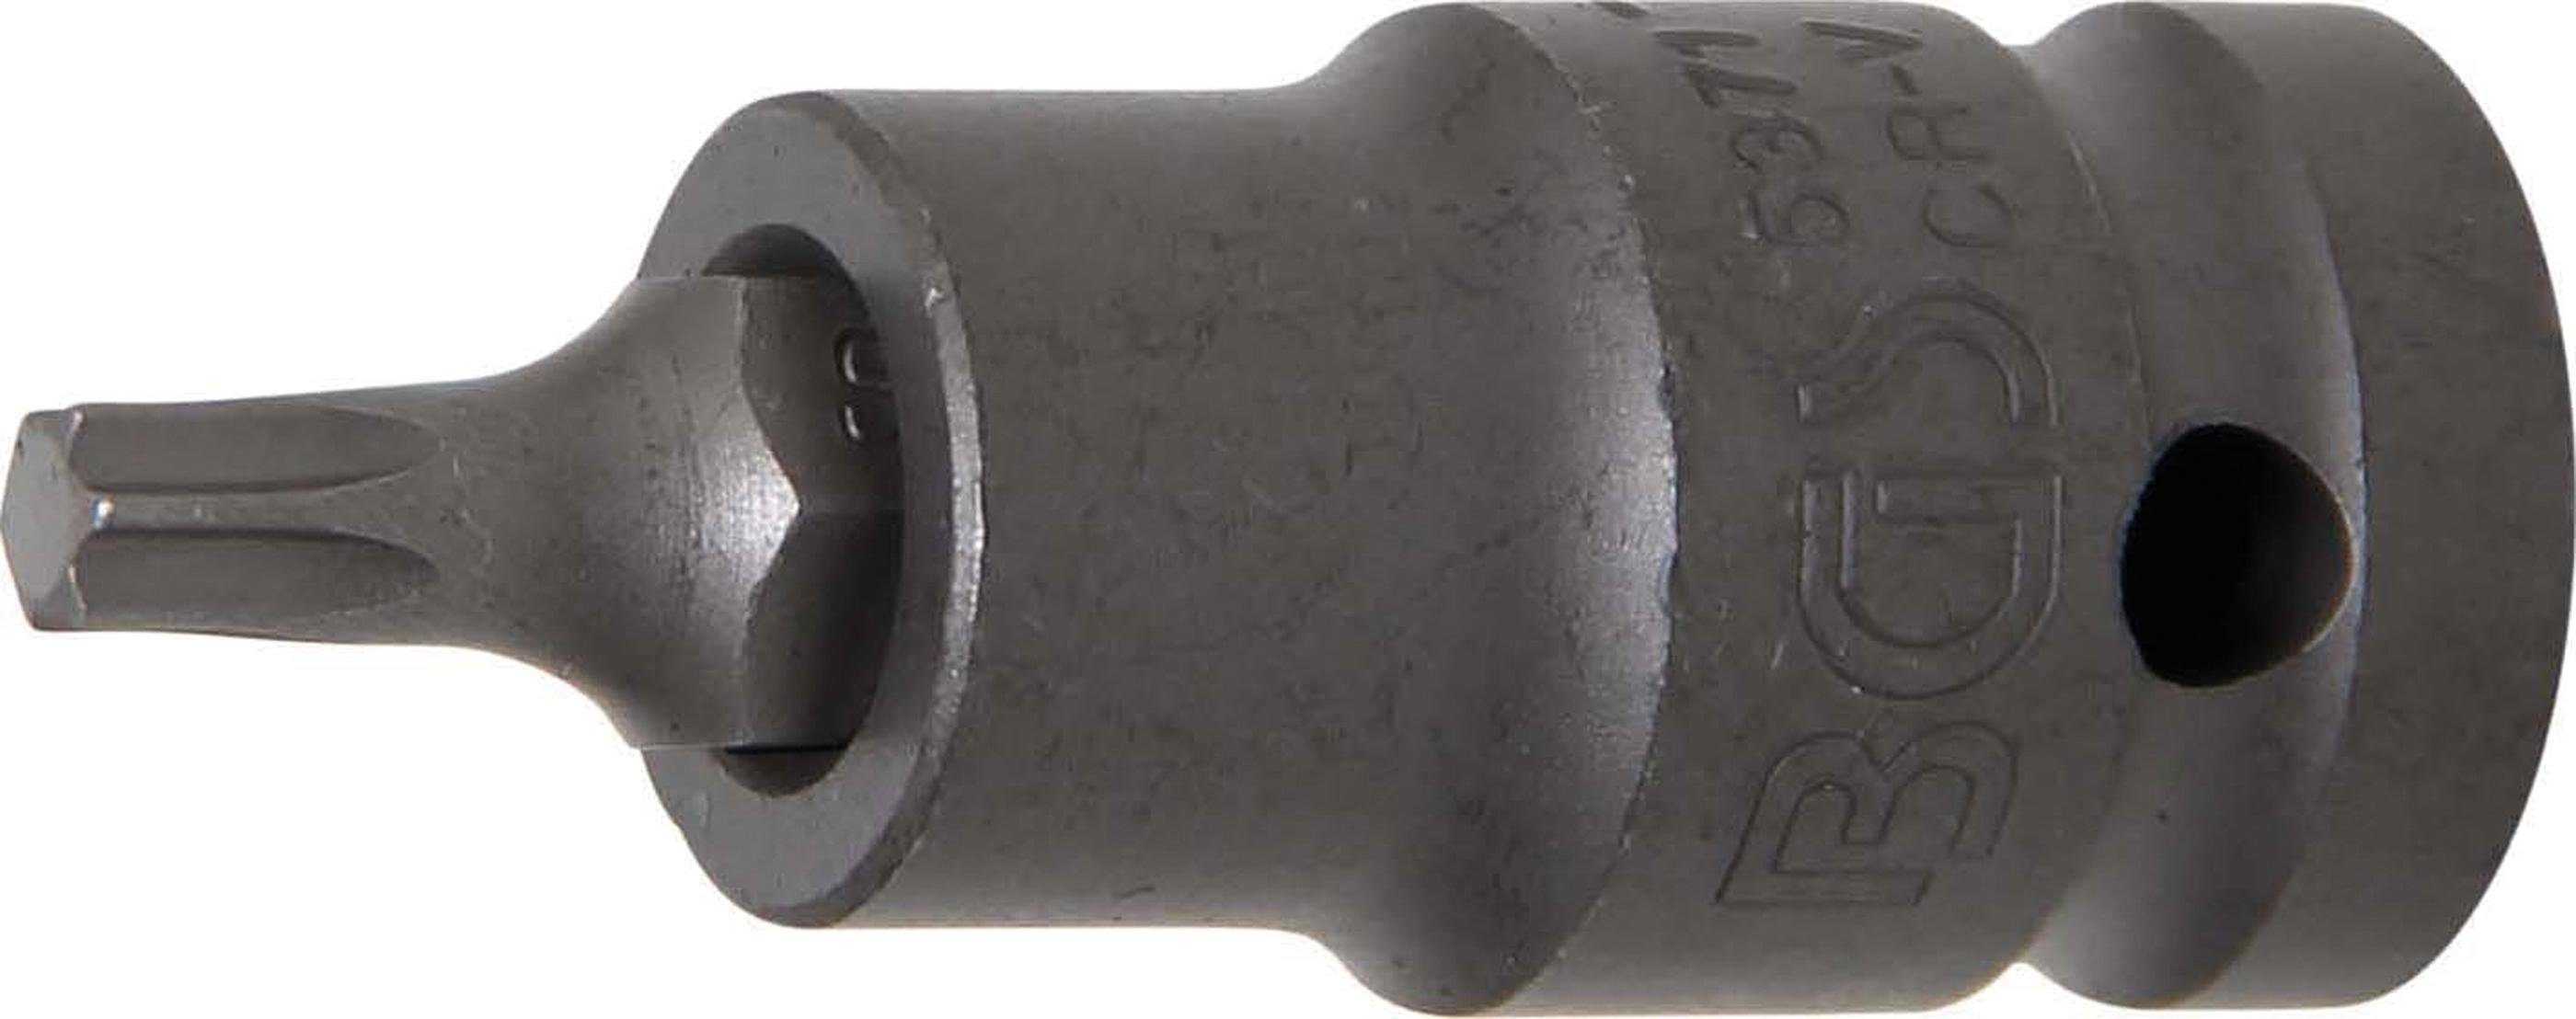 BGS technic Bit-Schraubendreher Kraft-Bit-Einsatz, Antrieb Innenvierkant 12,5 mm (1/2), T-Profil (für Torx) T30